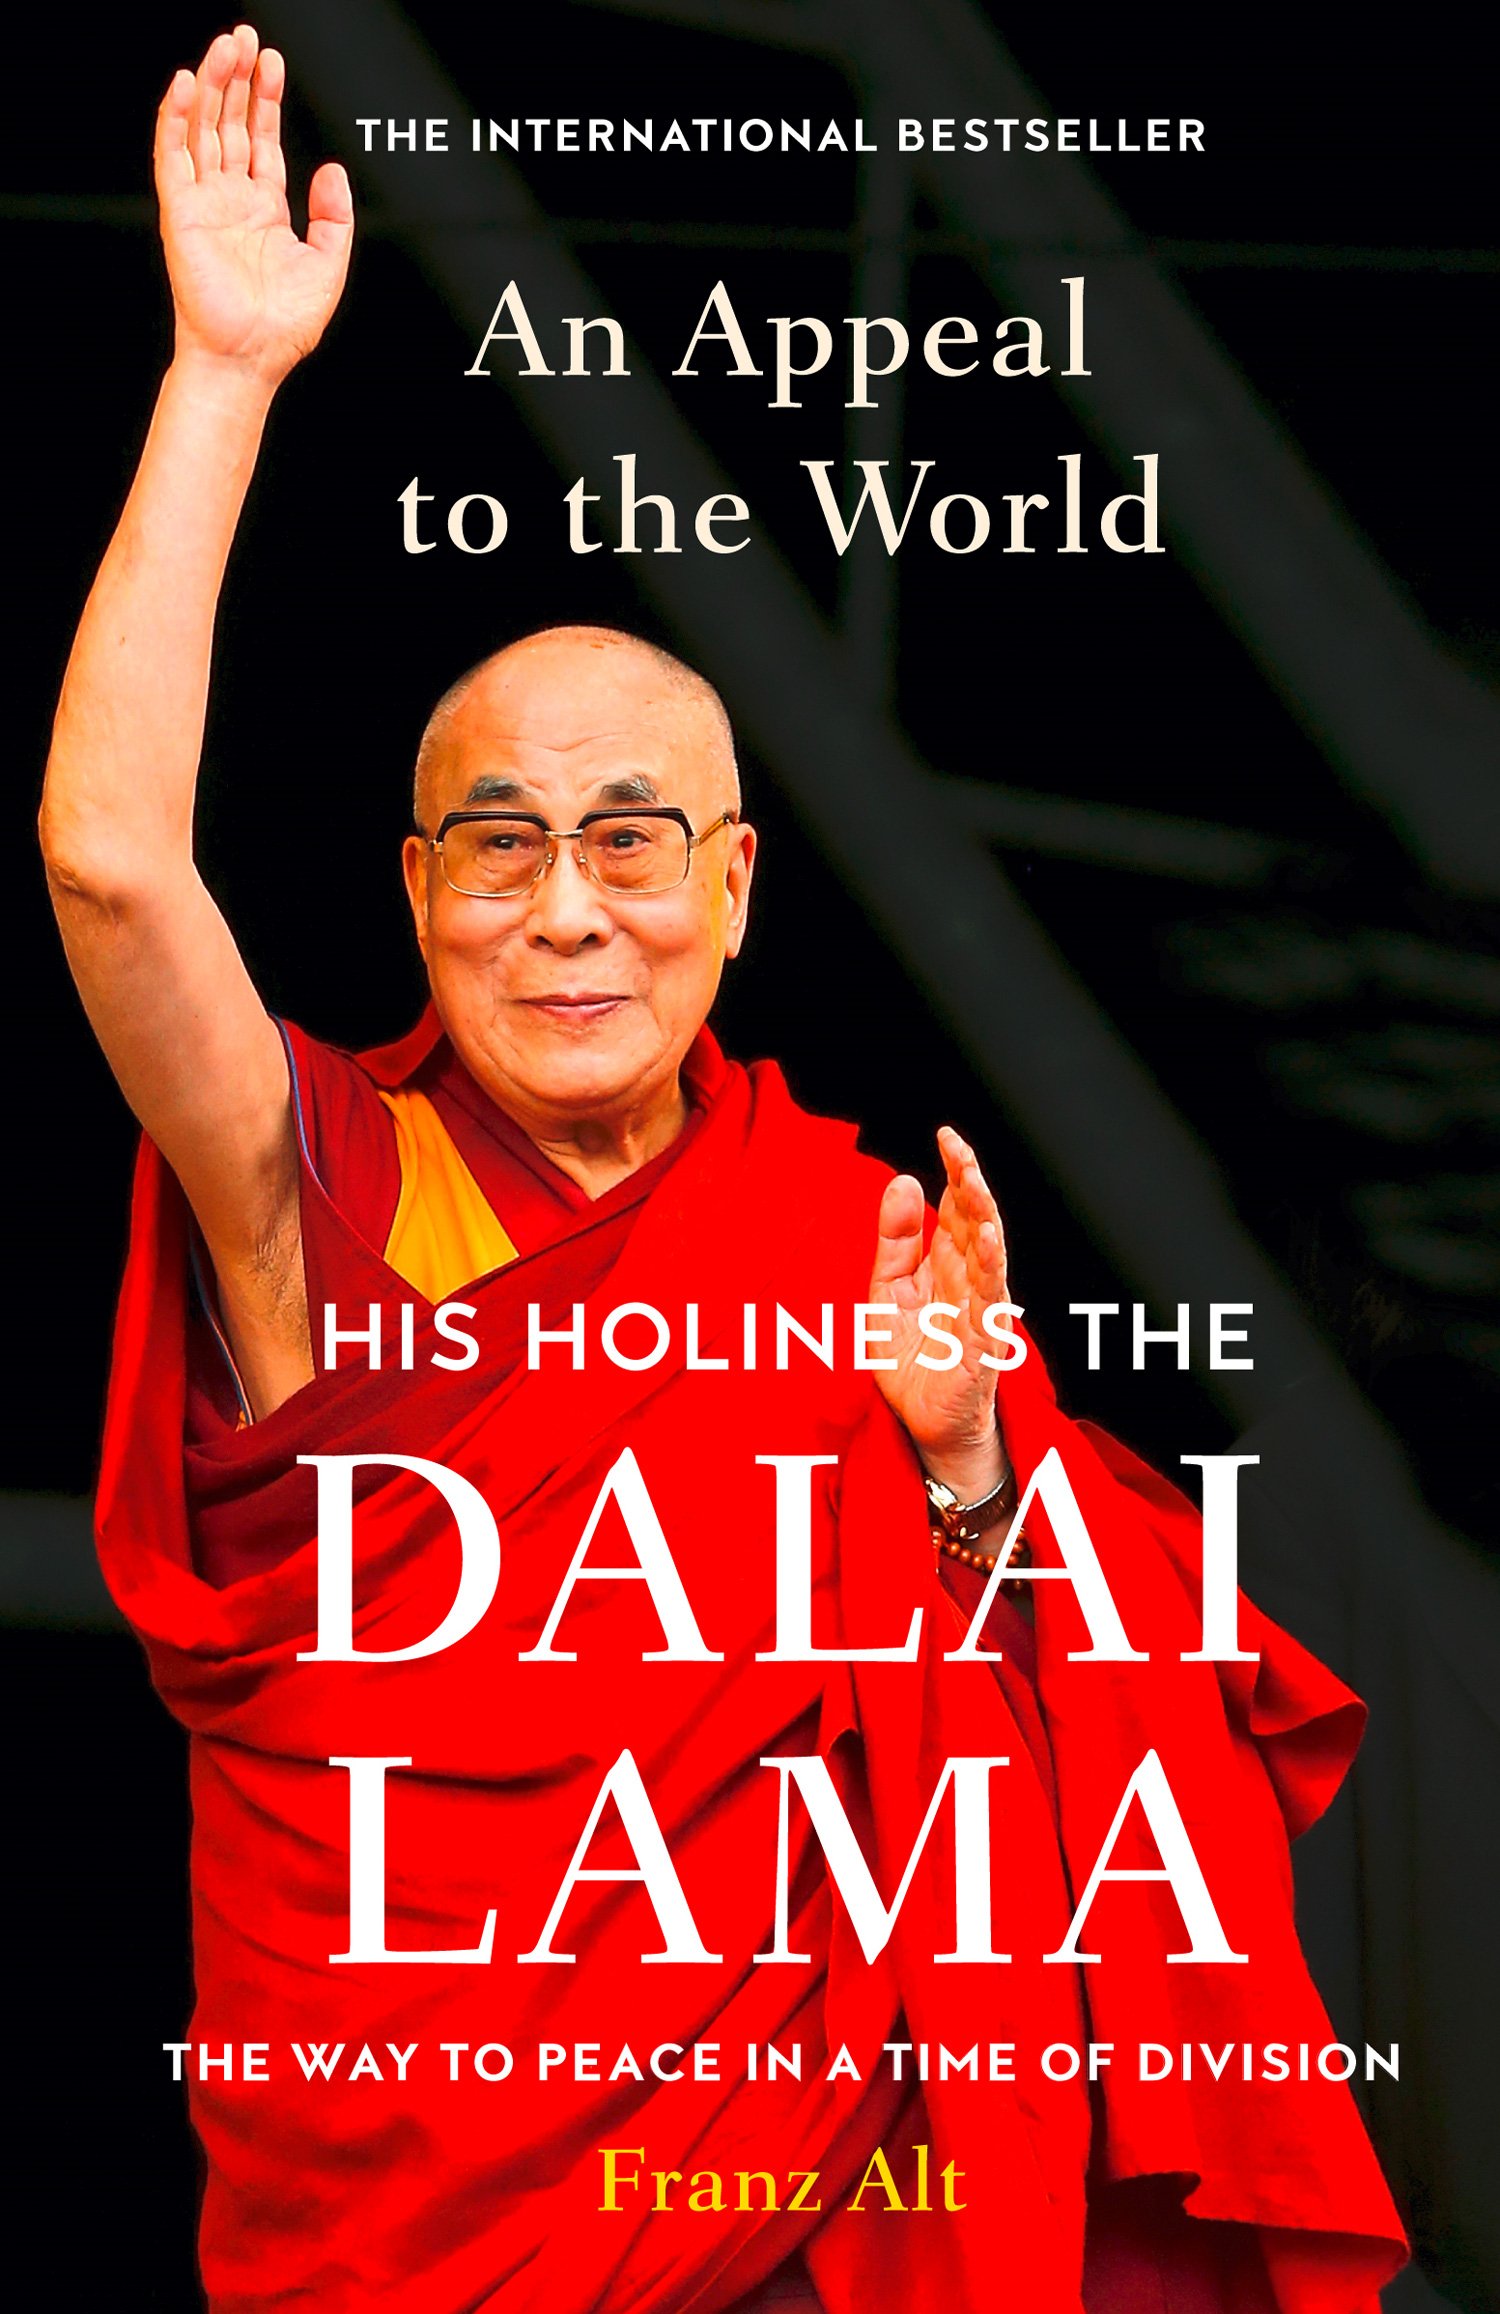 An Appeal to the World | Dalai Lama